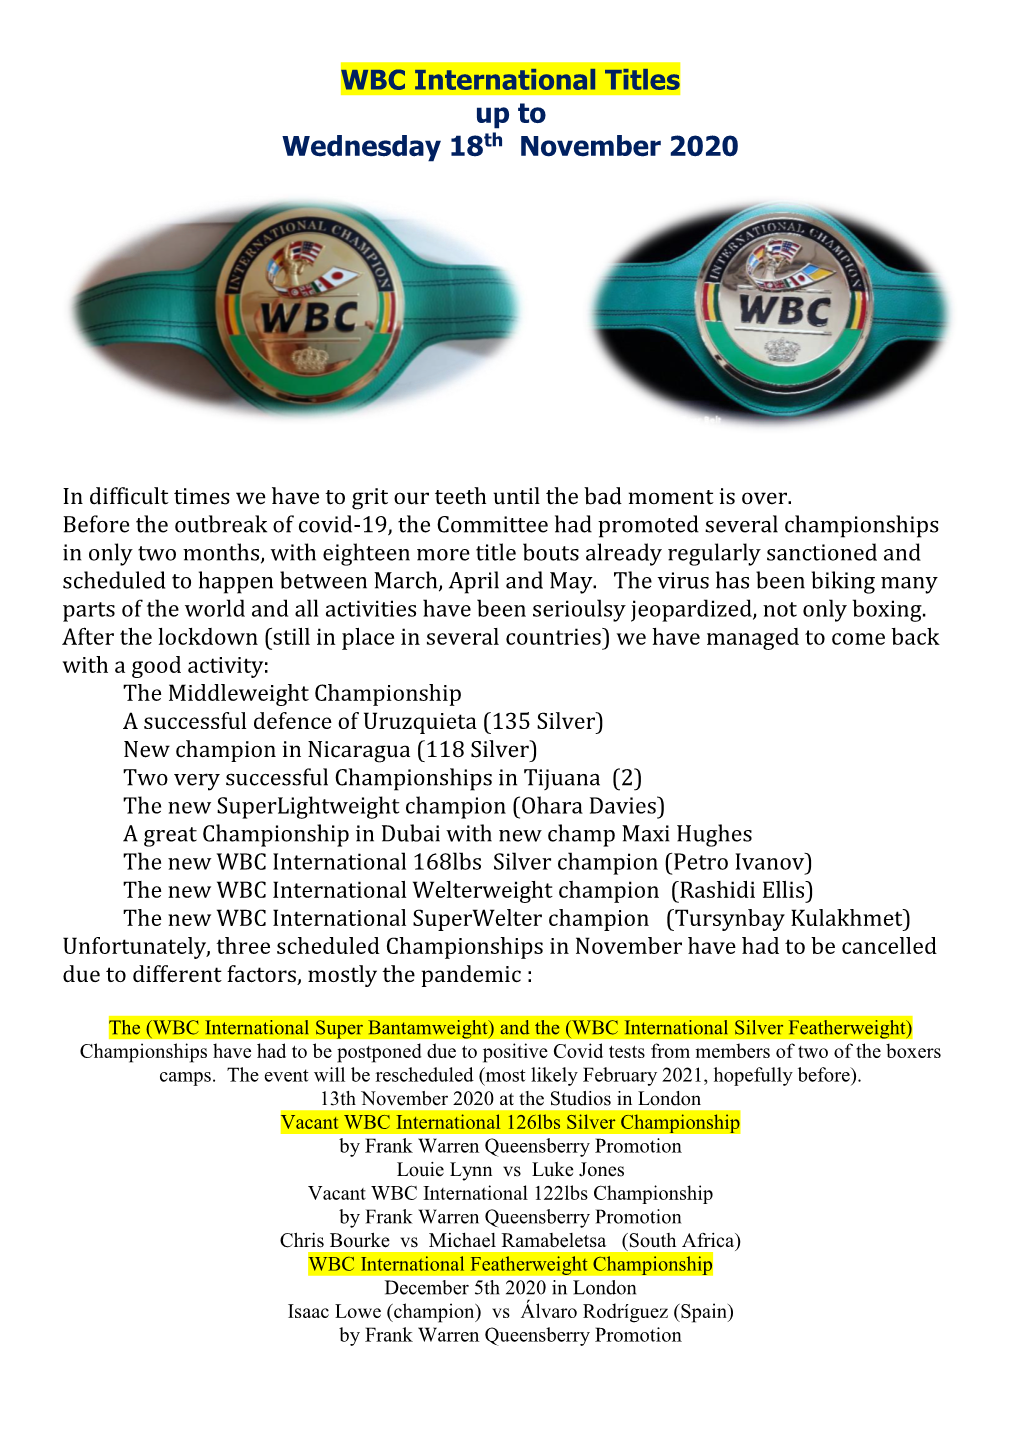 WBC International Titles up to Wednesday 18Th November 2020